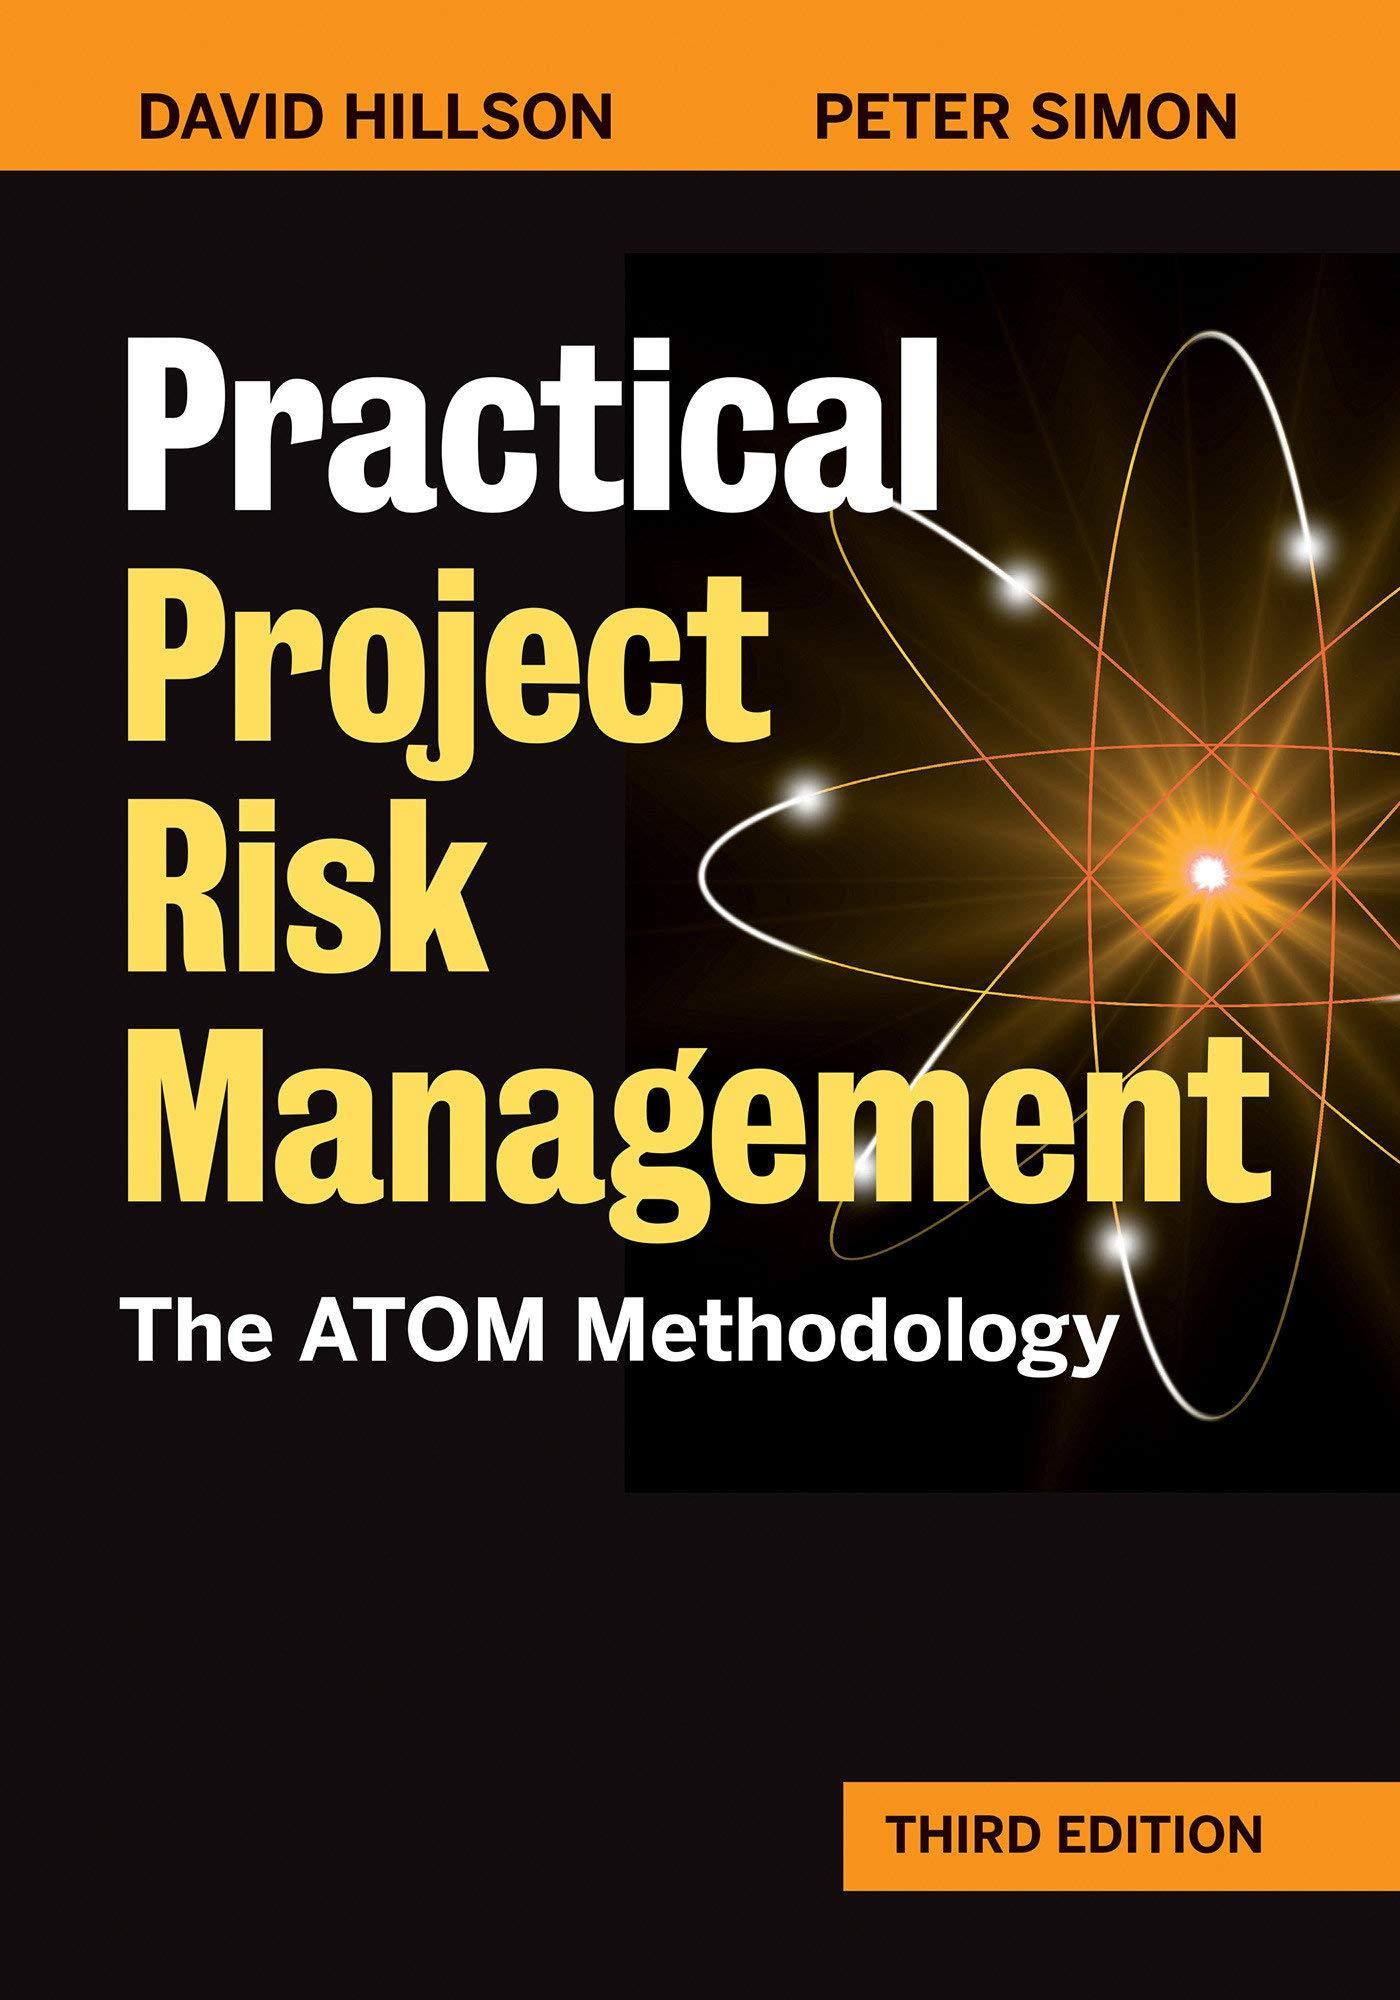 practical project risk management the atom methodology 3rd edition david hillson, peter simon 1523089202,